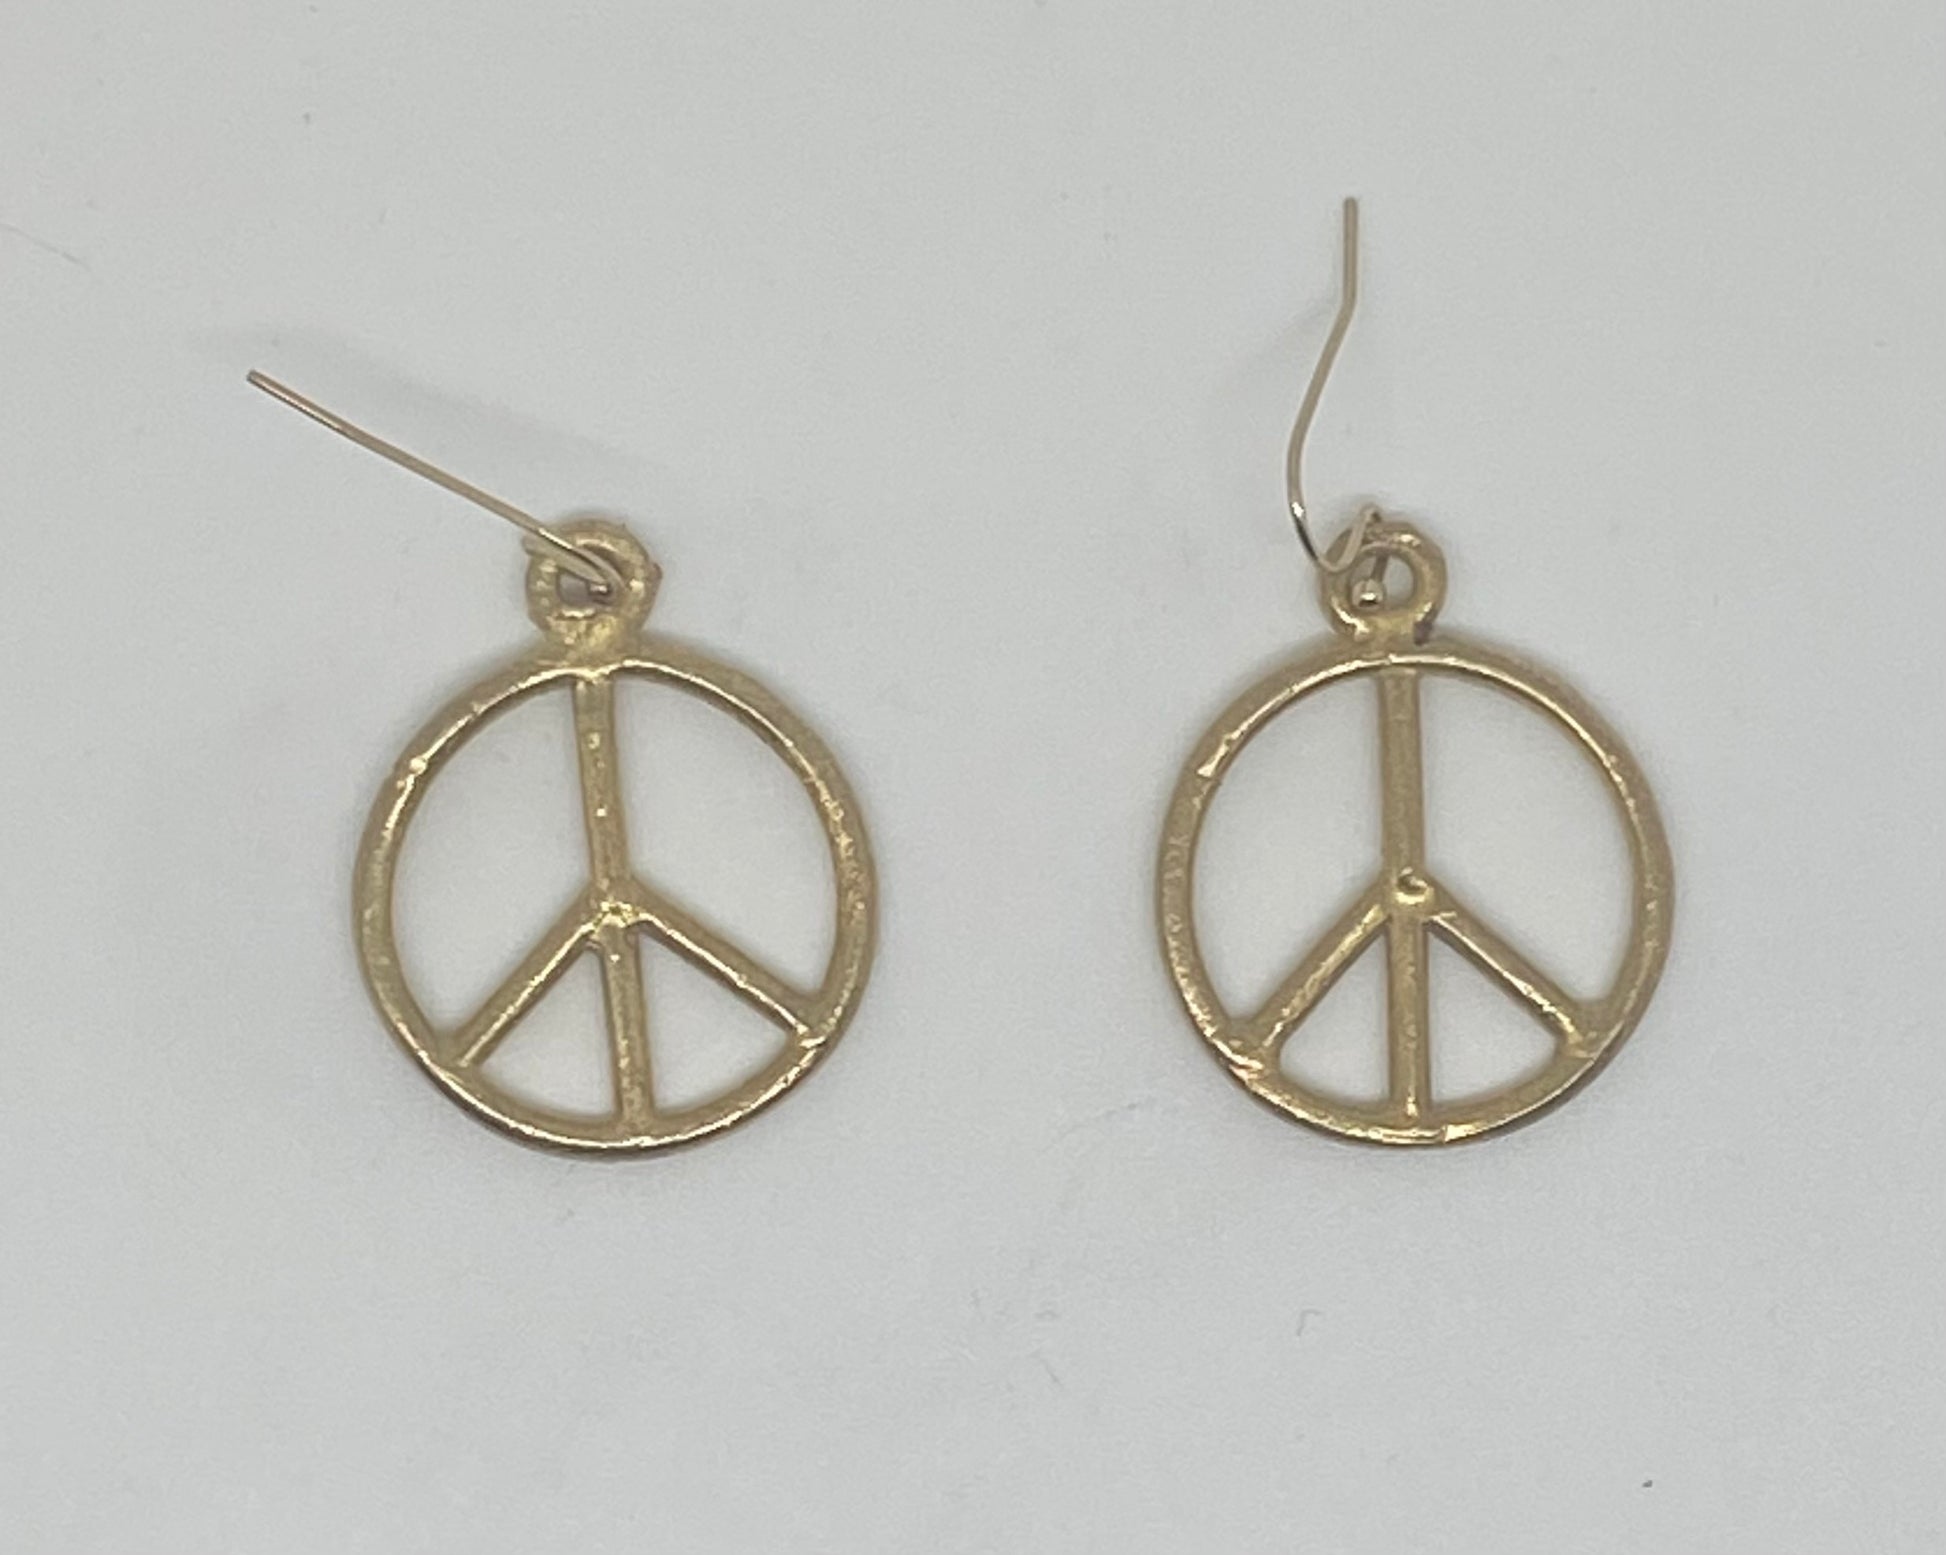 Peace sign earrings